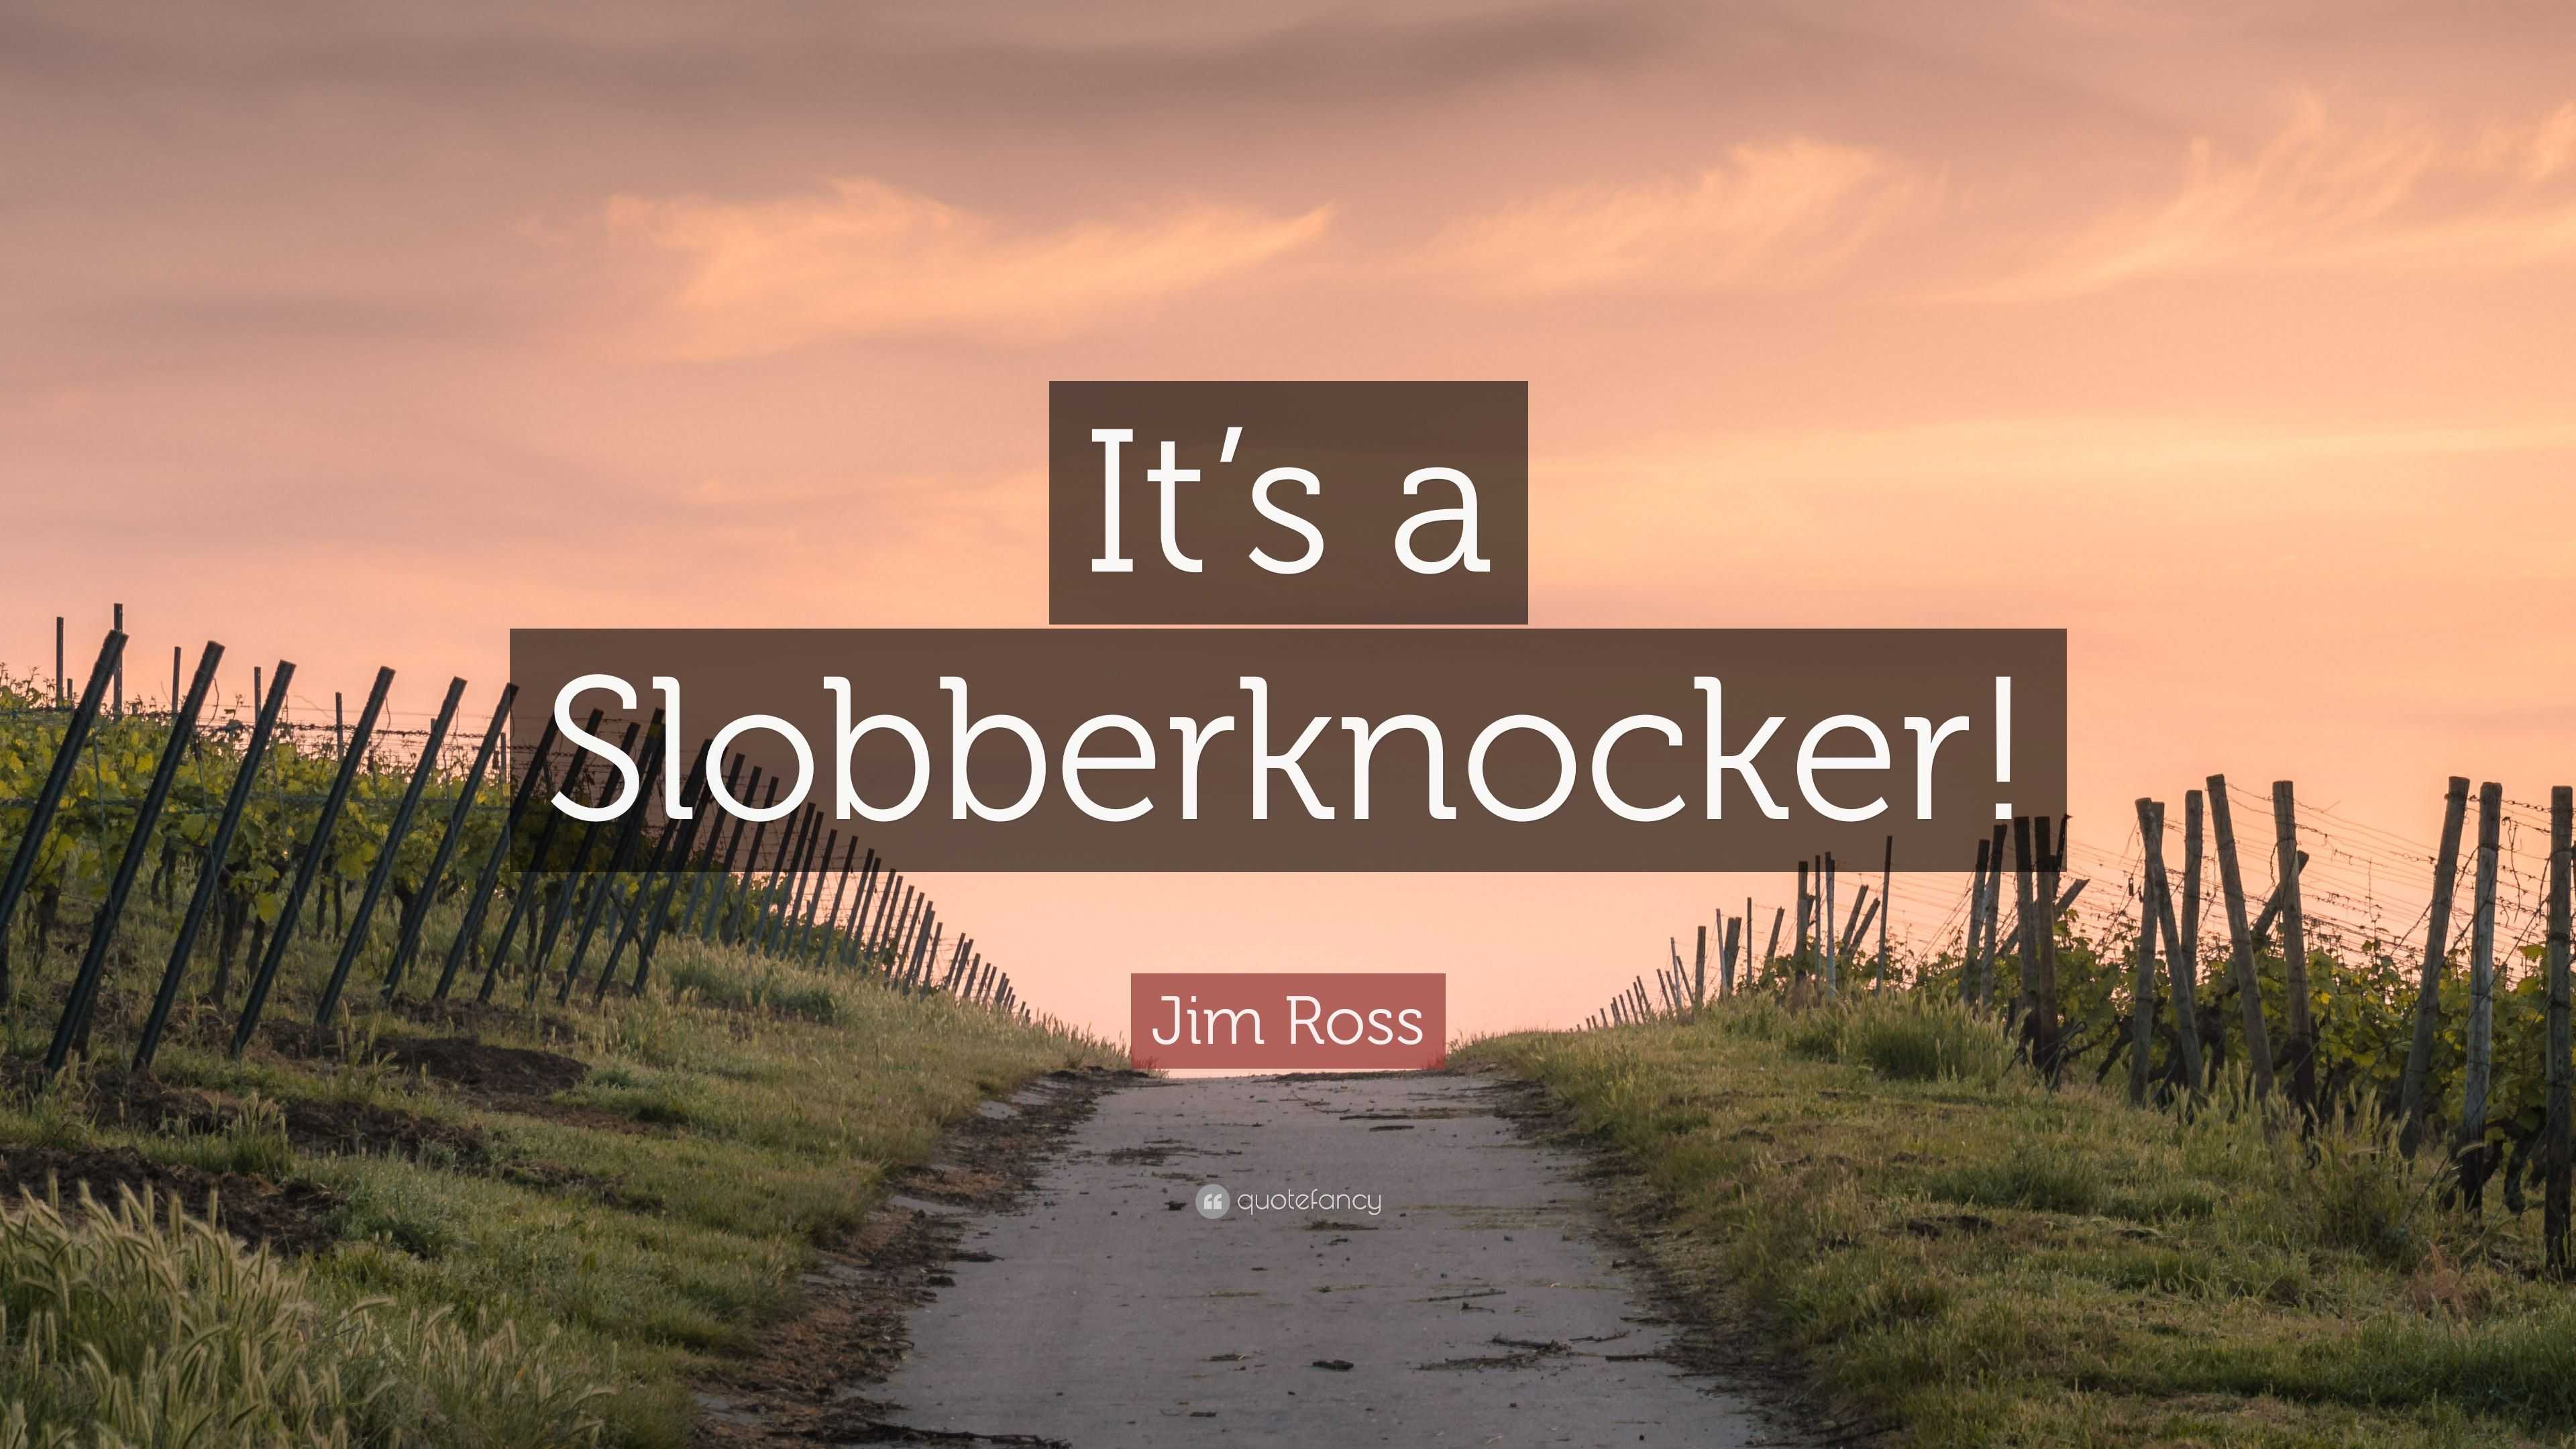 Jim Ross quote: It's gonna be a slobberknocker!